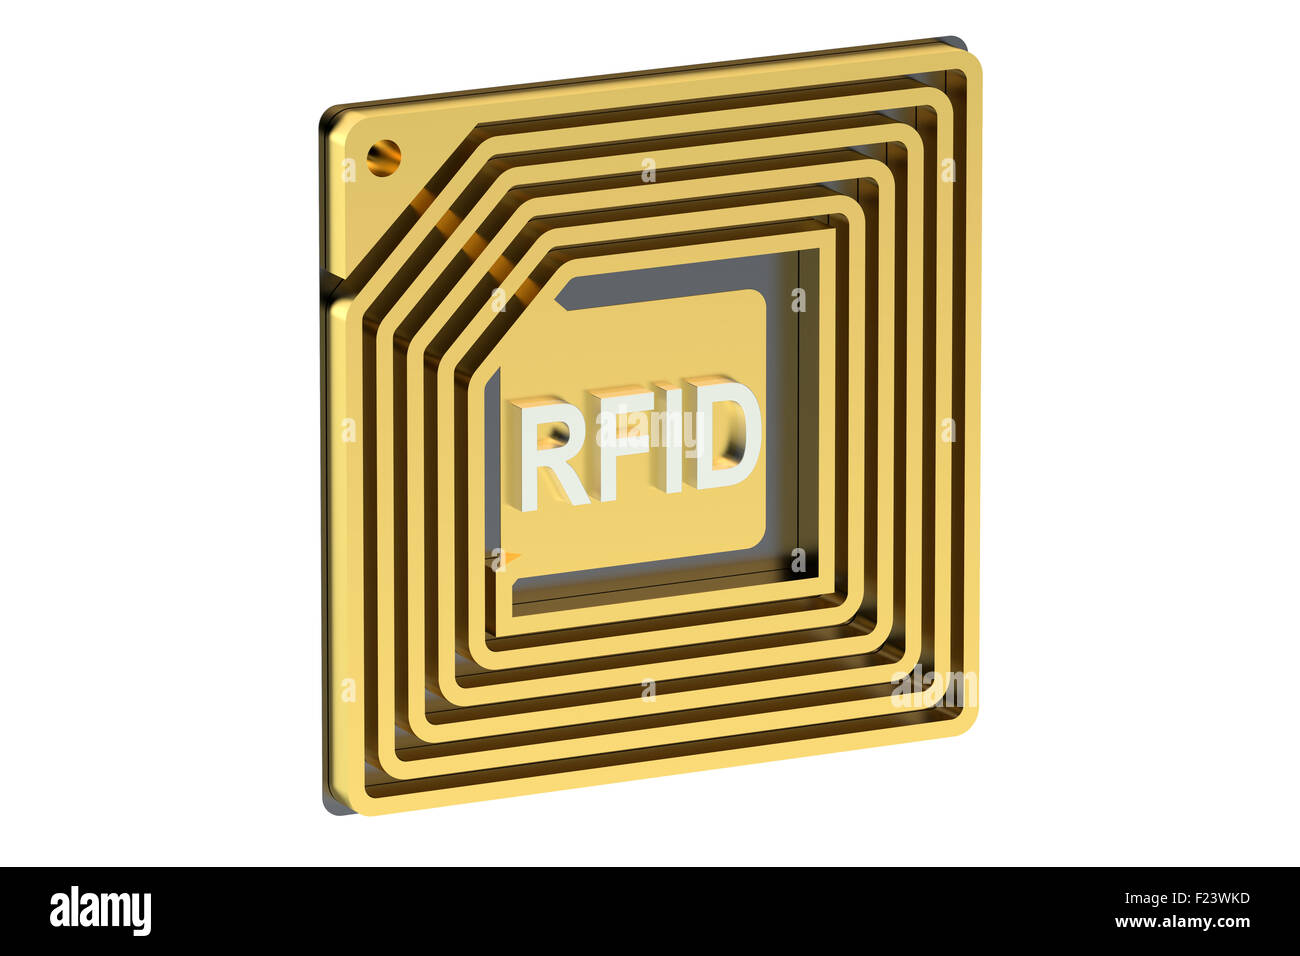 RFID tag isolated on white background Stock Photo